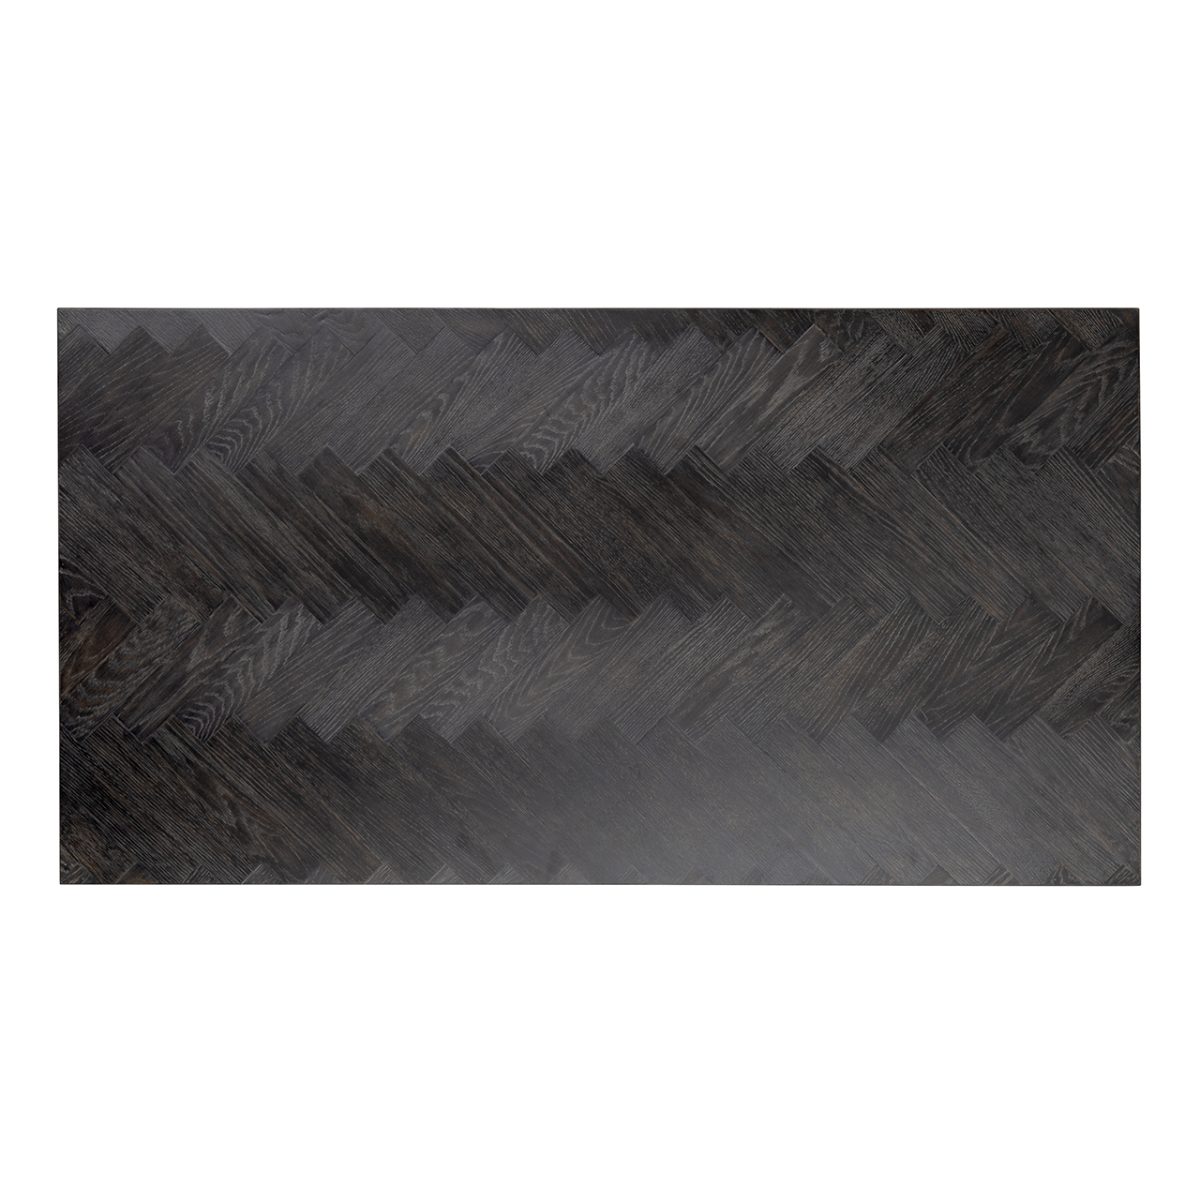 7447 - Salontafel Blackbone gold 150x80 (Block) (Black rustic)